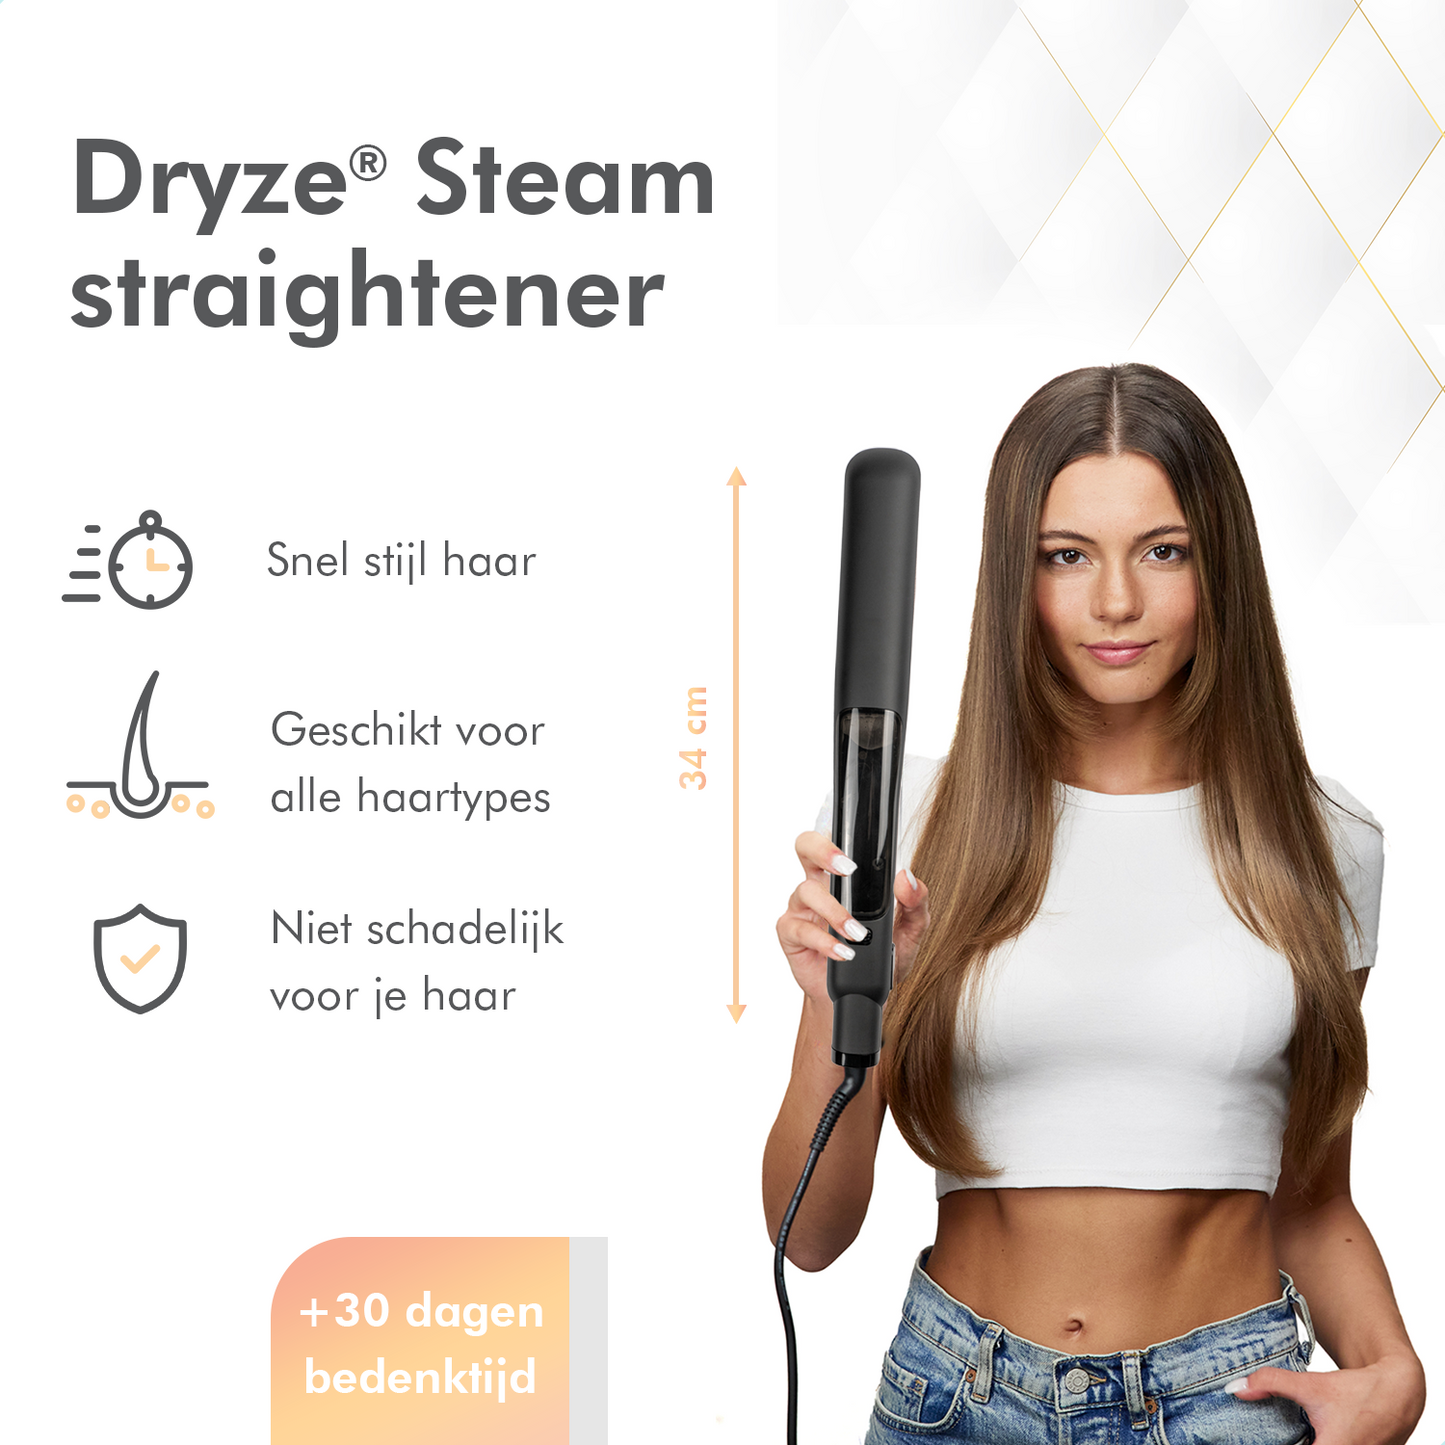 Dryze Steam straightener - Steampod - Stoom stijltang - Rosé gold/black edition